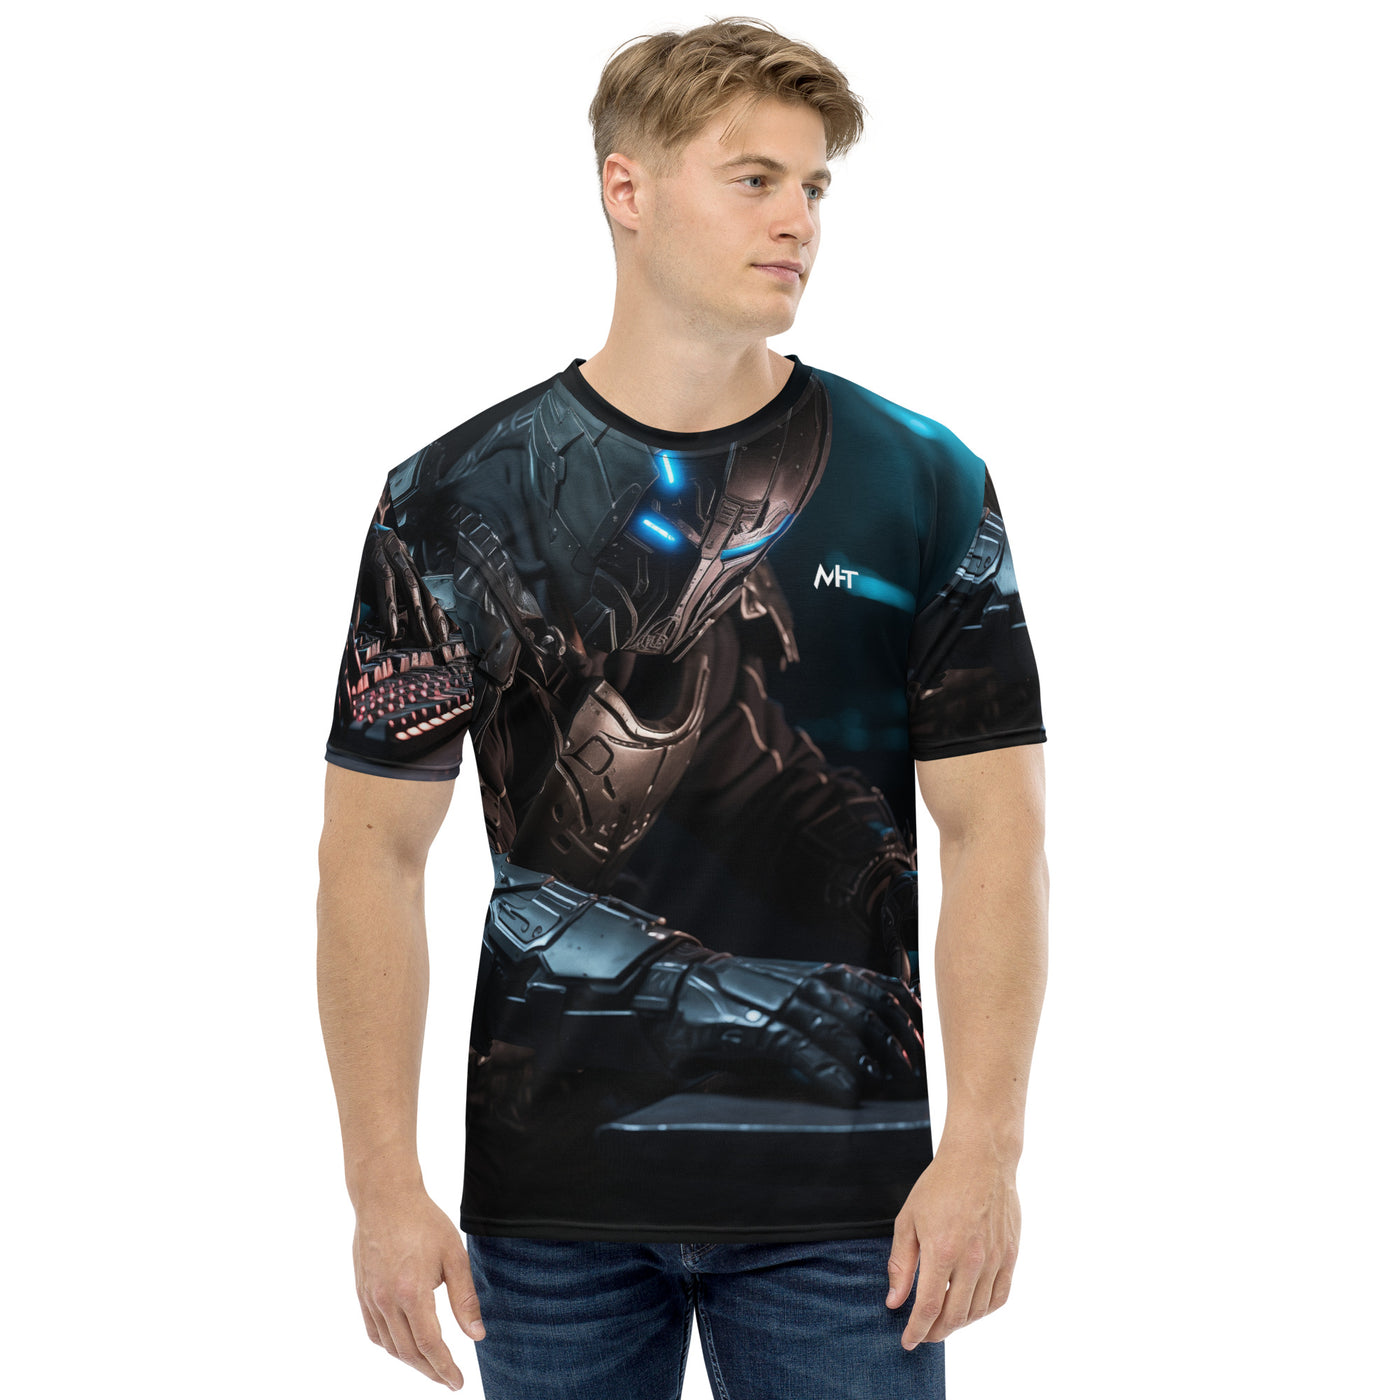 CyberArms Warrior v10 - Men's t-shirt